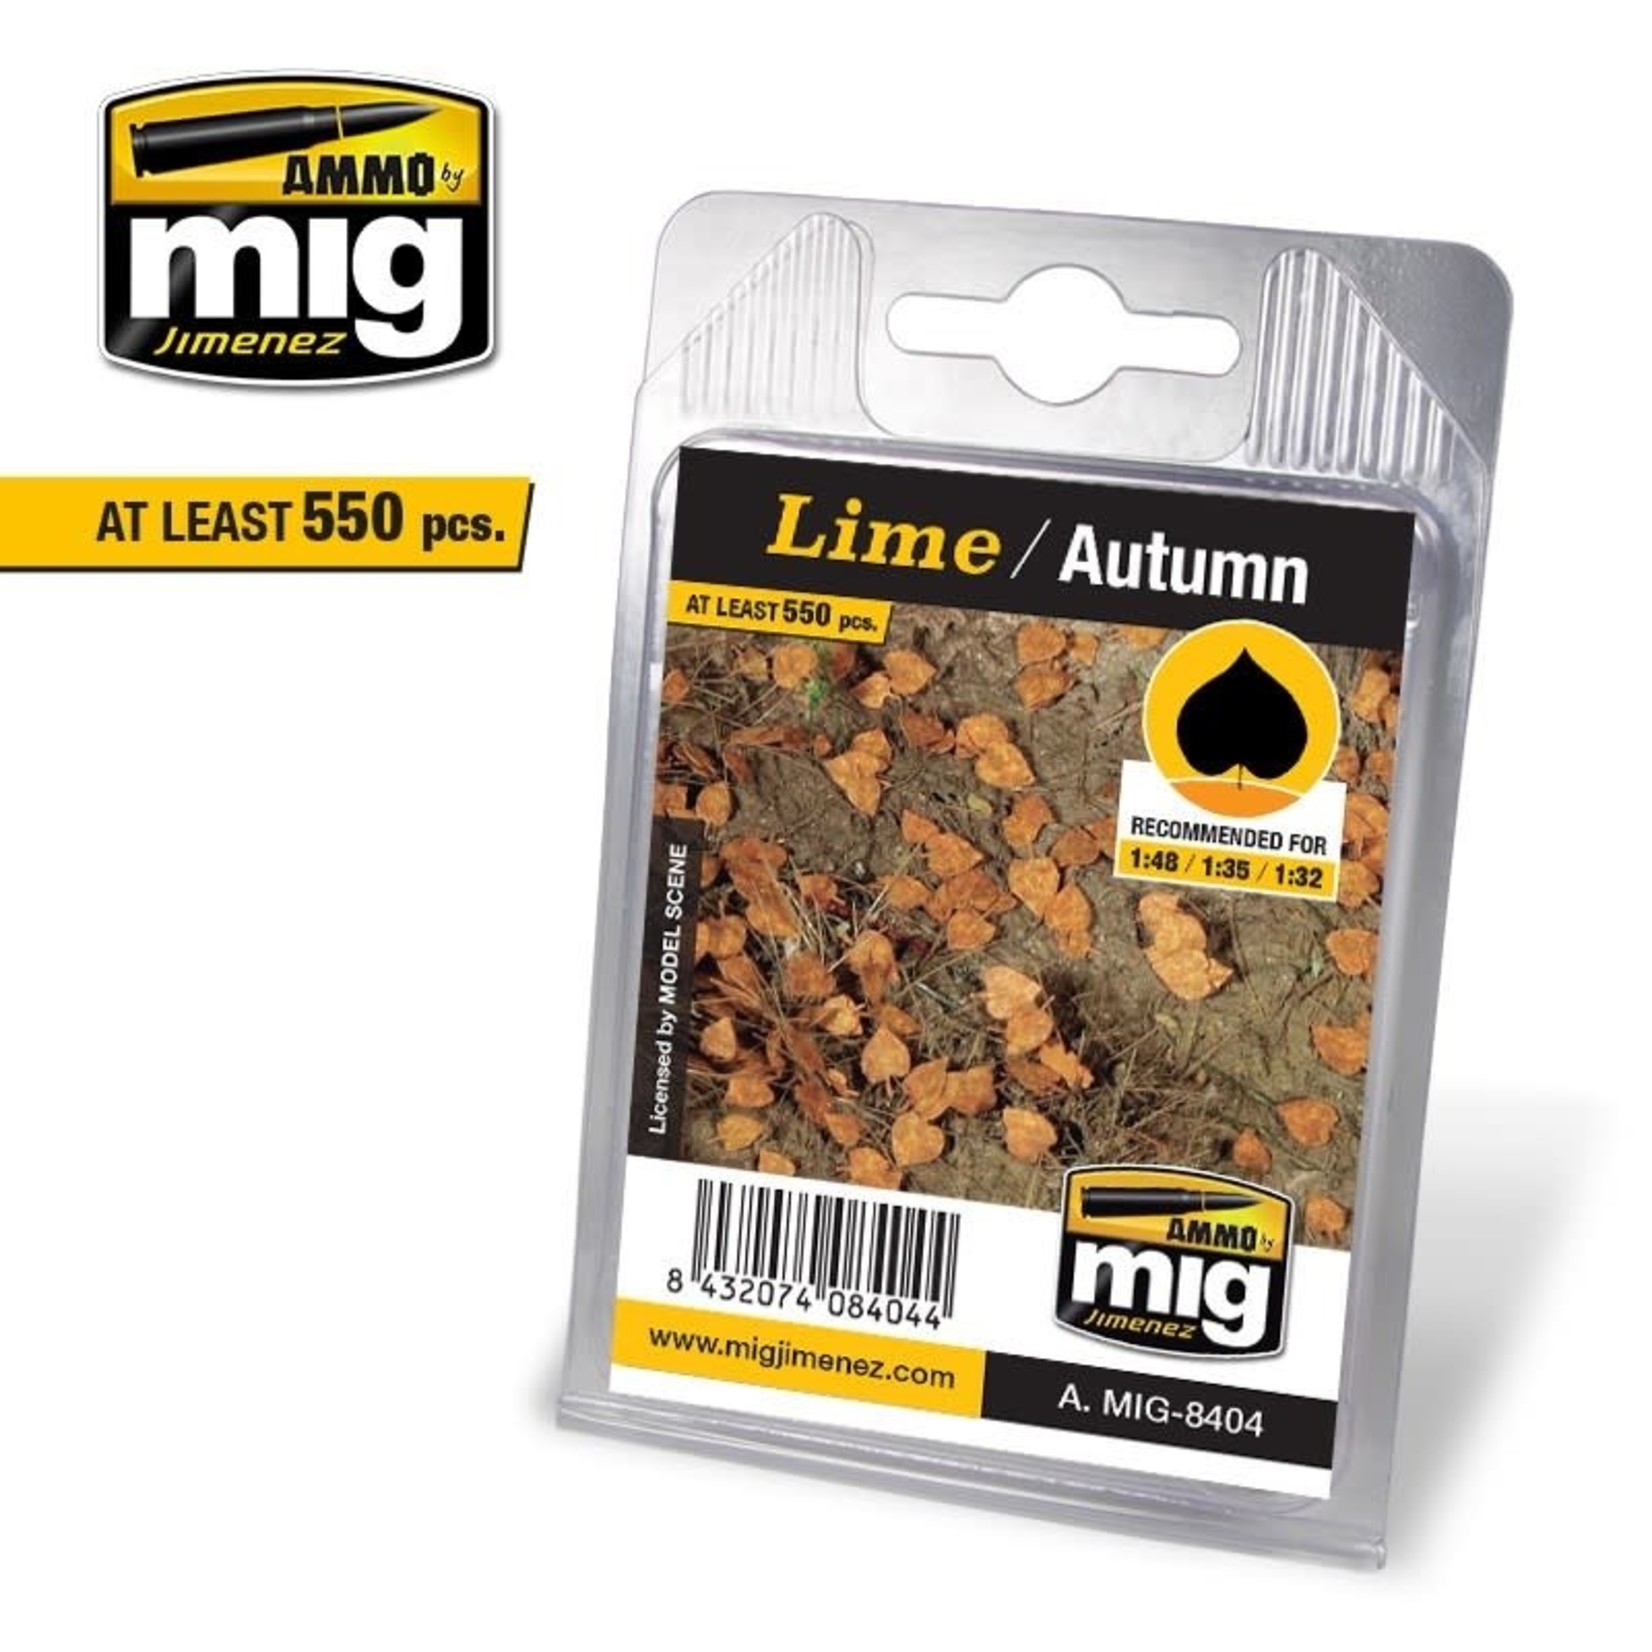 Ammo by Mig Jimenez A.MIG-8404 Lime / Autumn Leaves